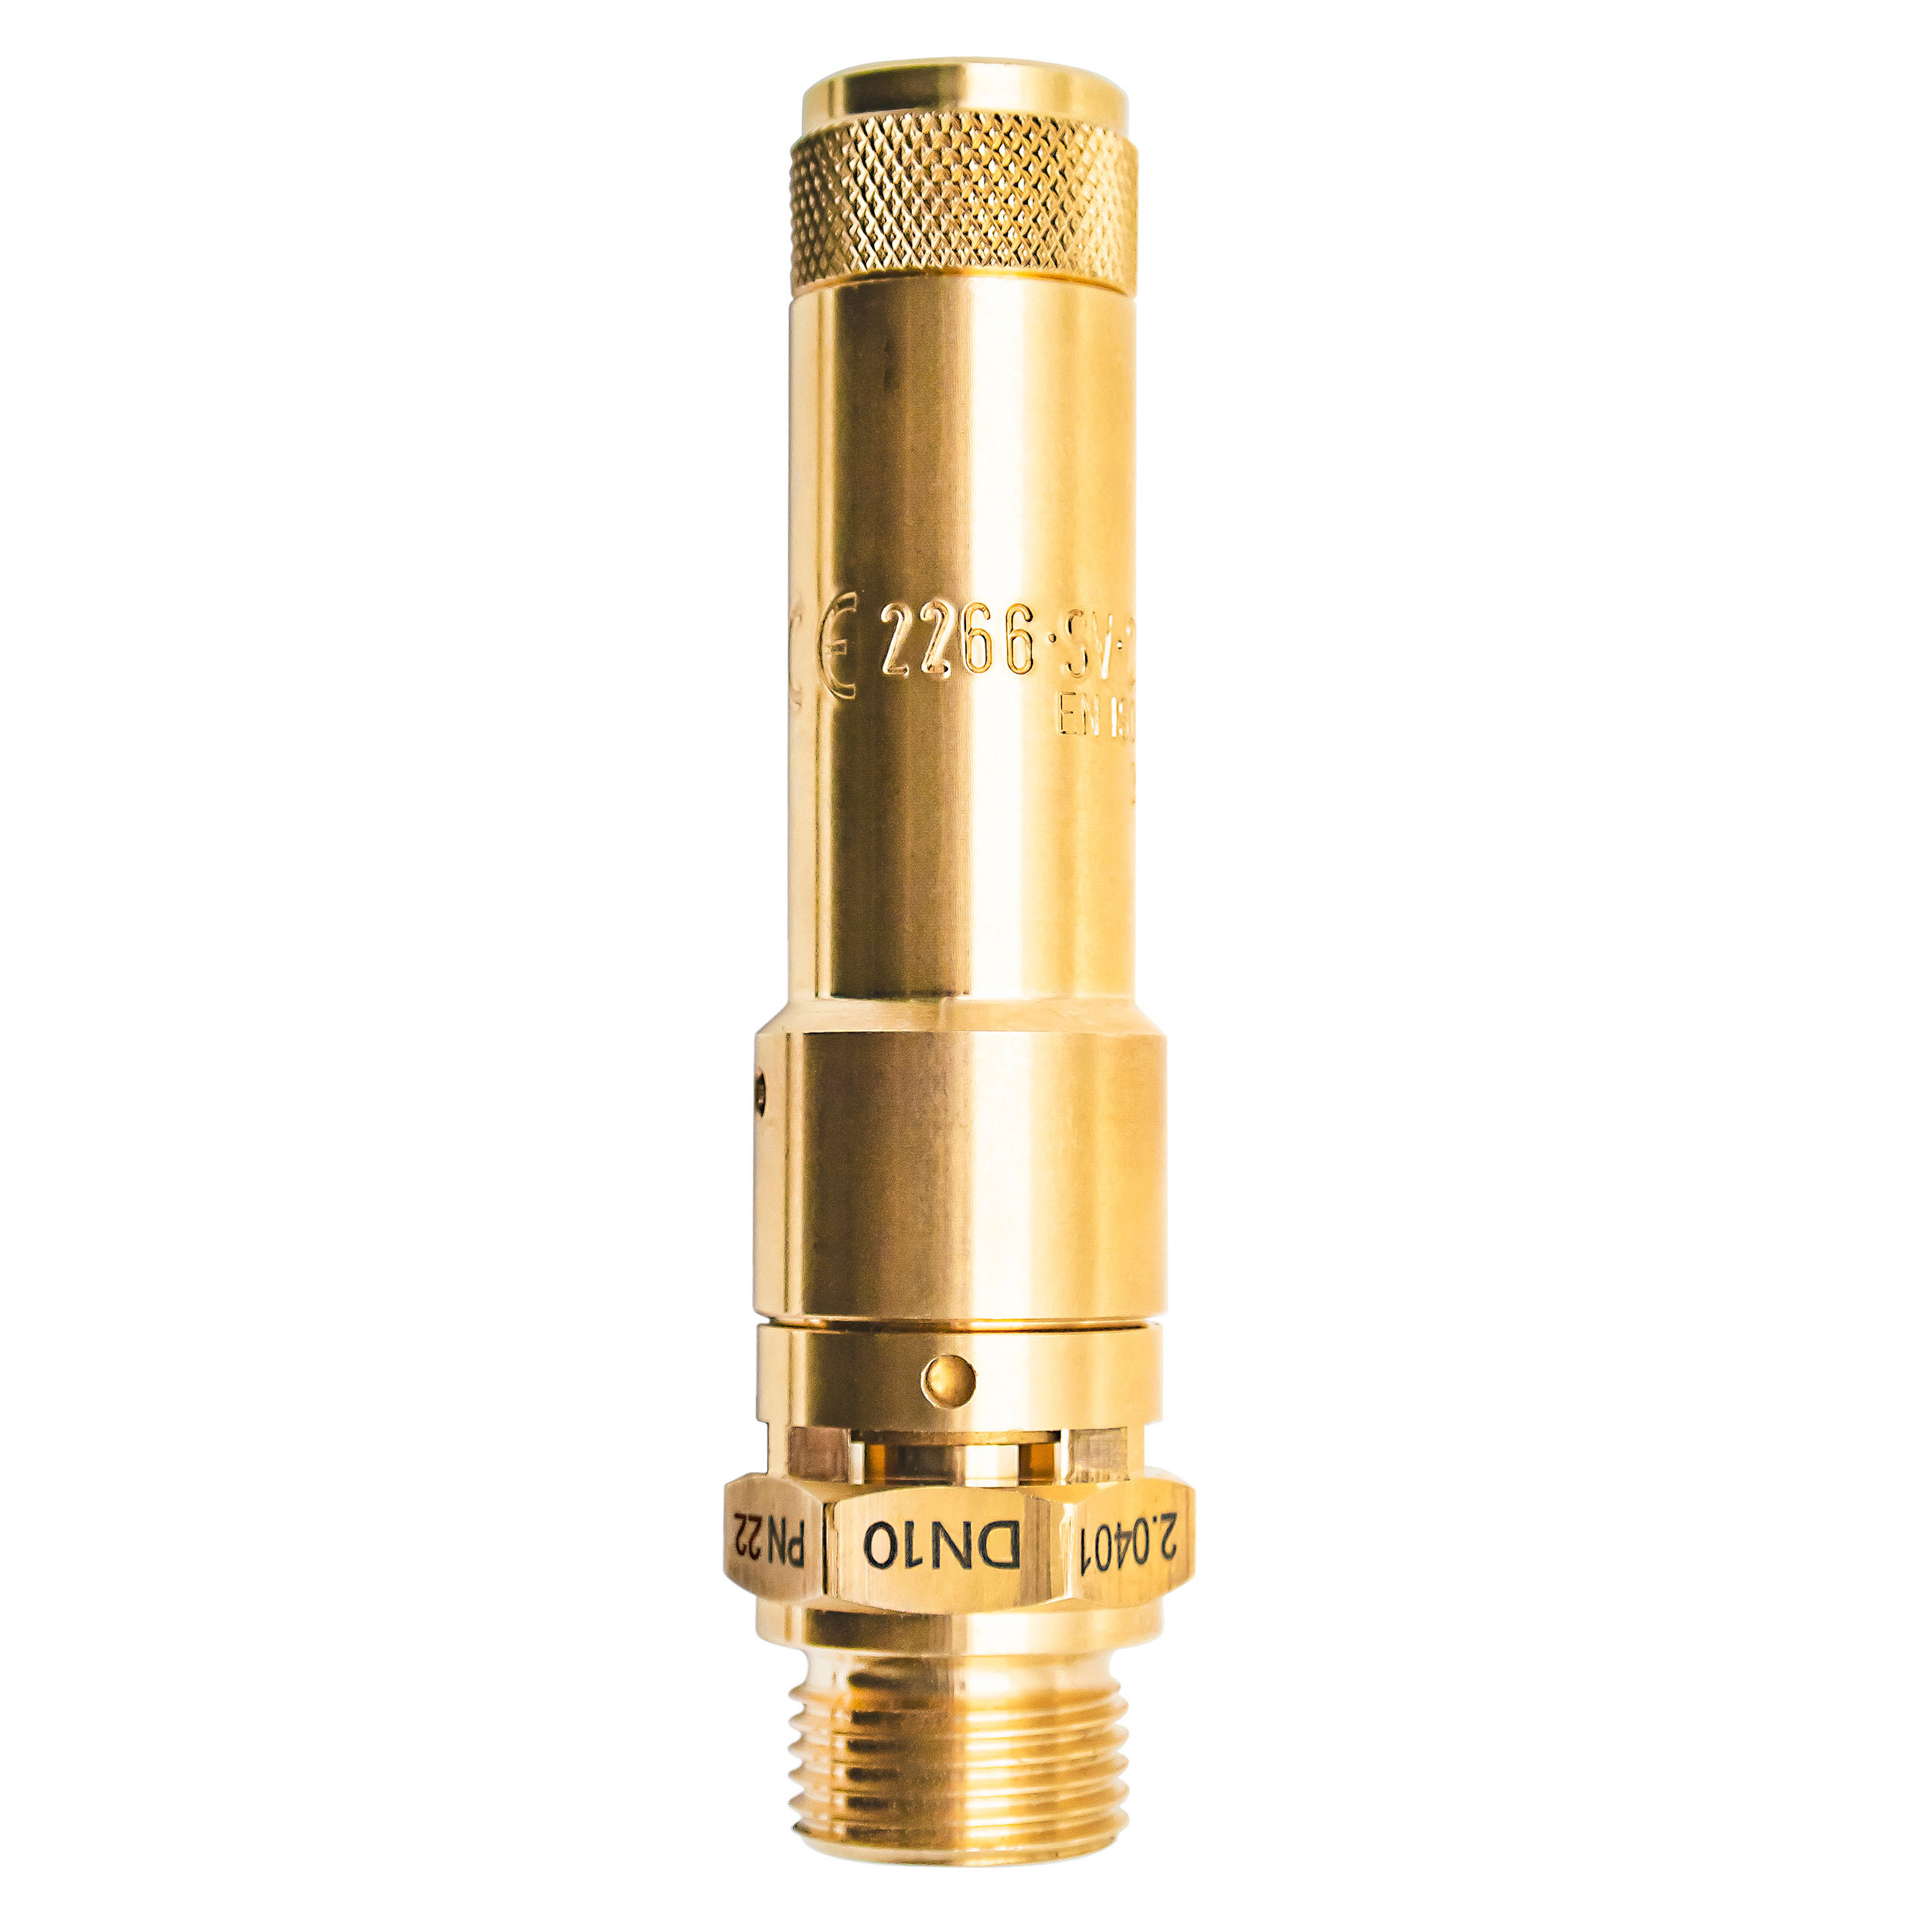 Savety valve component tested DN 10, G½, set pressure: 5.5 bar (79,75 psi)